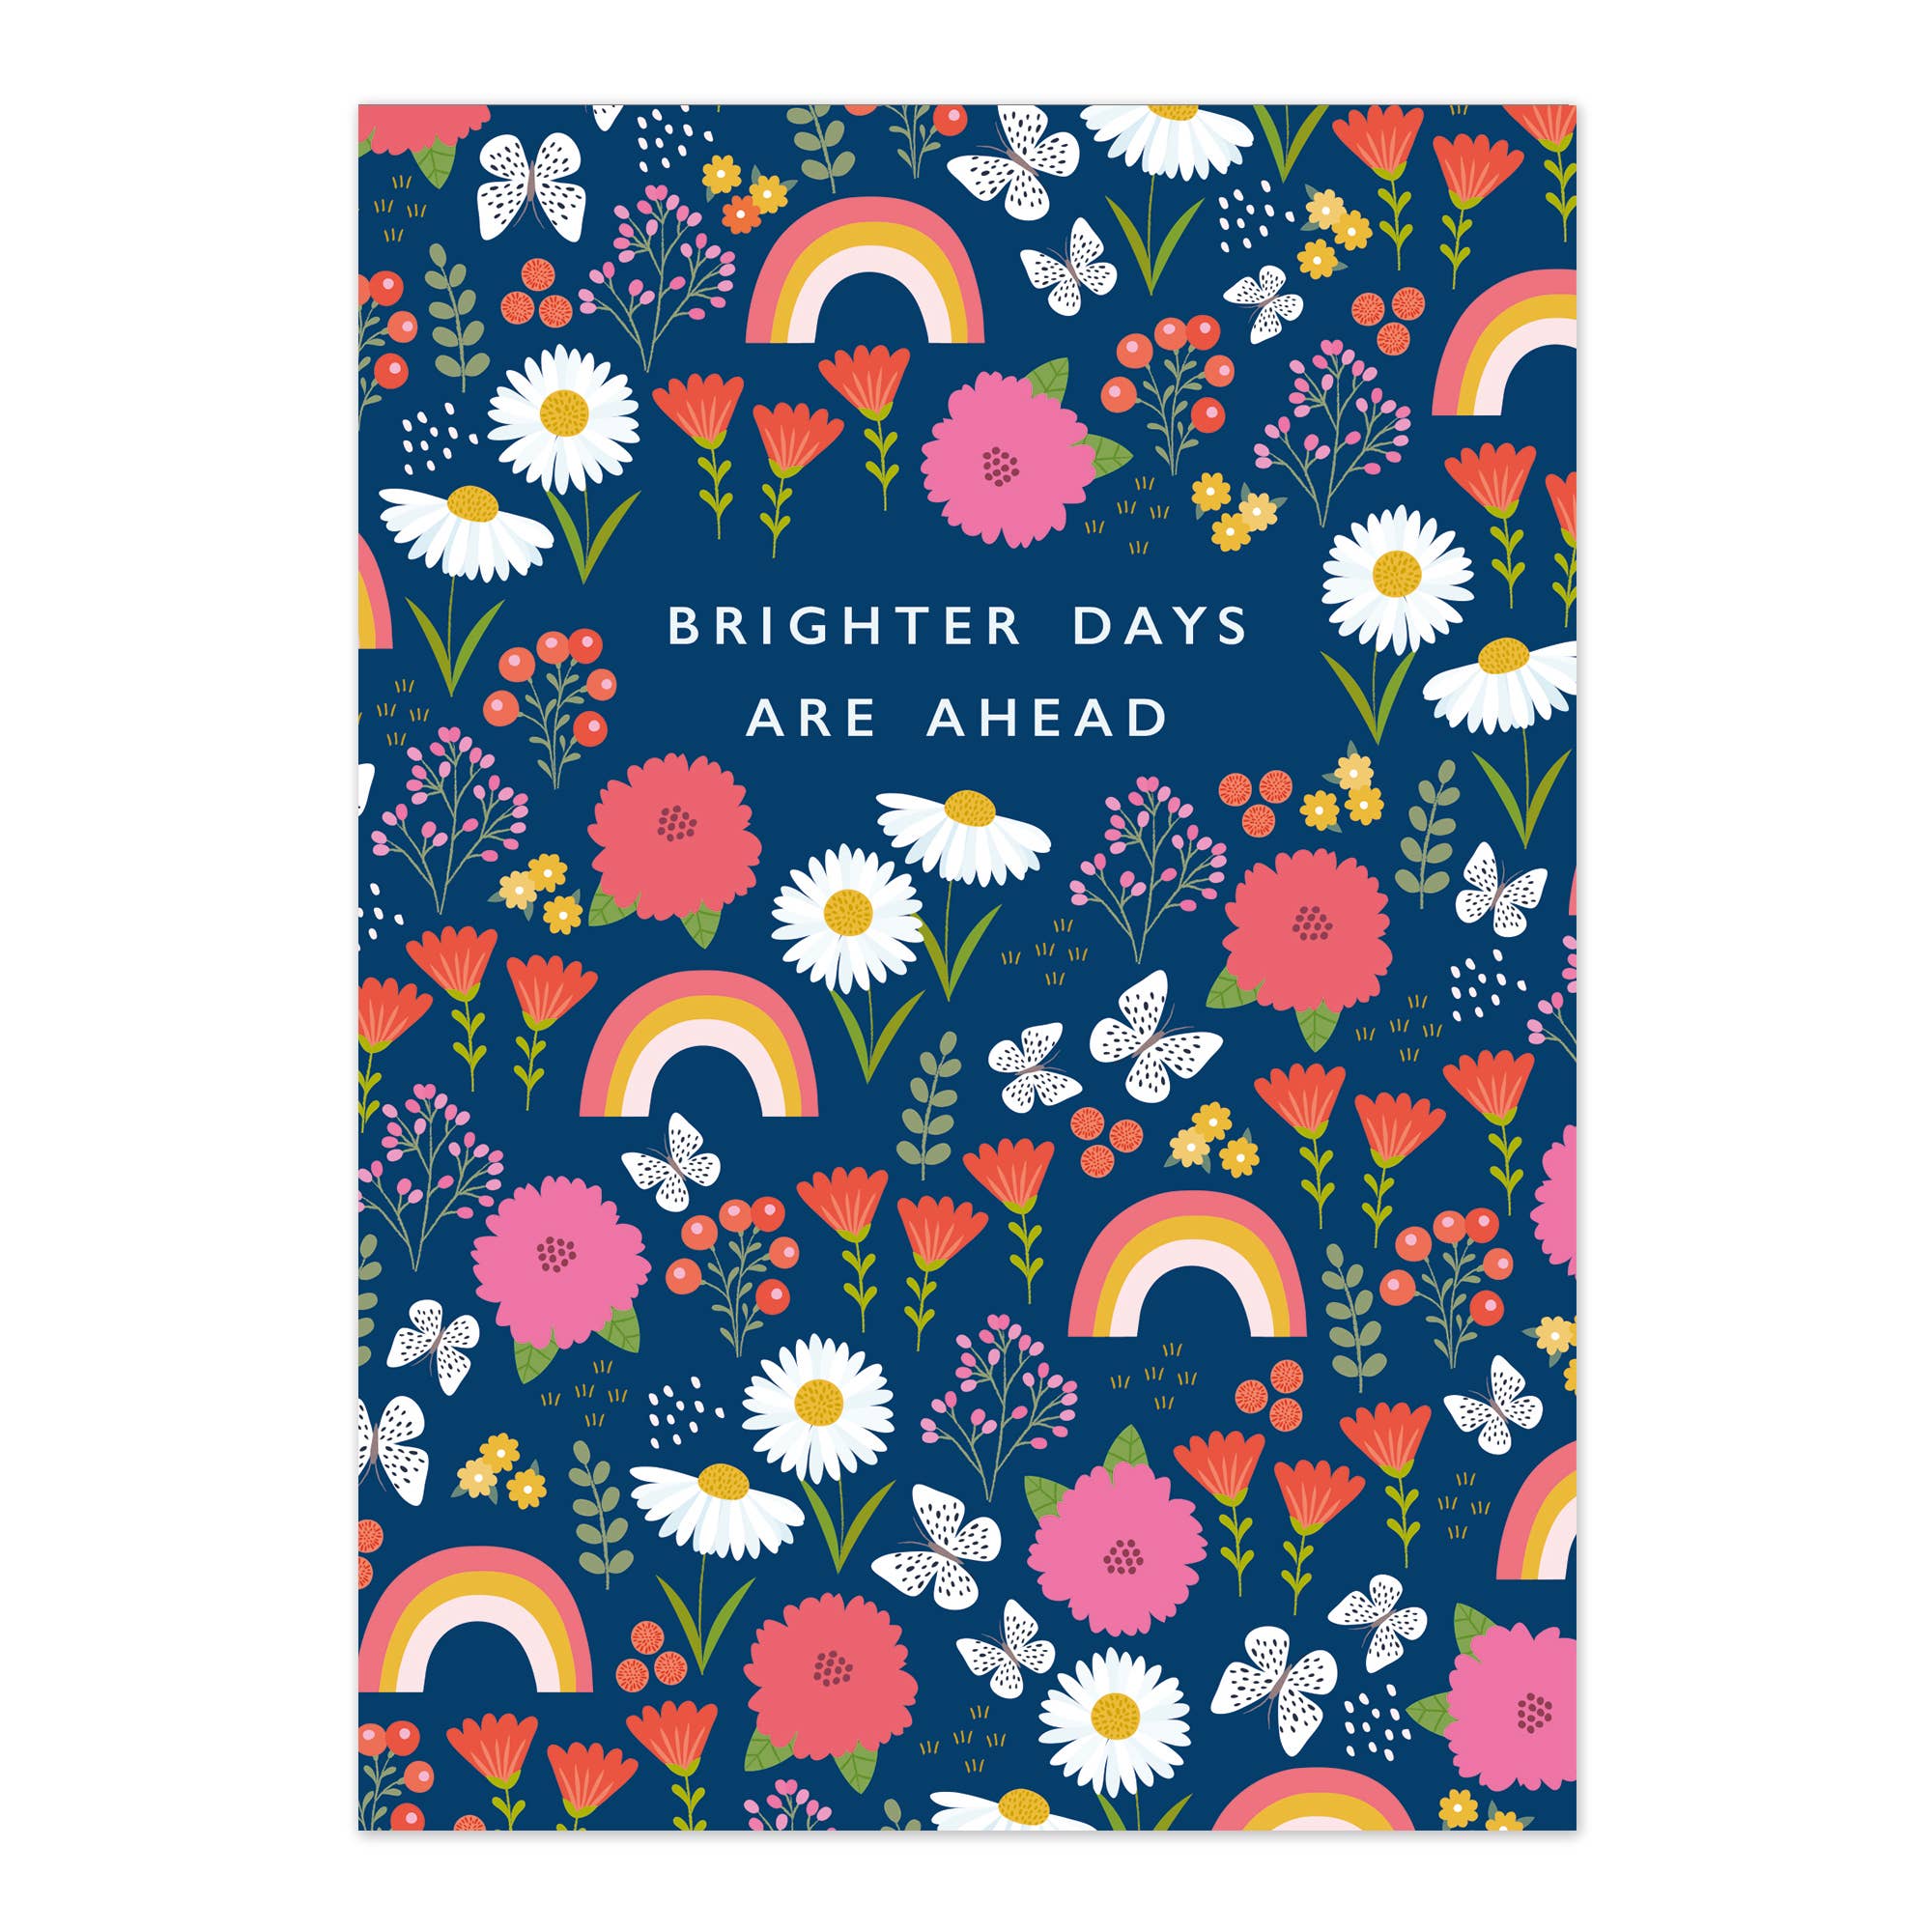 Brighter Days Ahead Greetings Card - Rainbows & Flowers